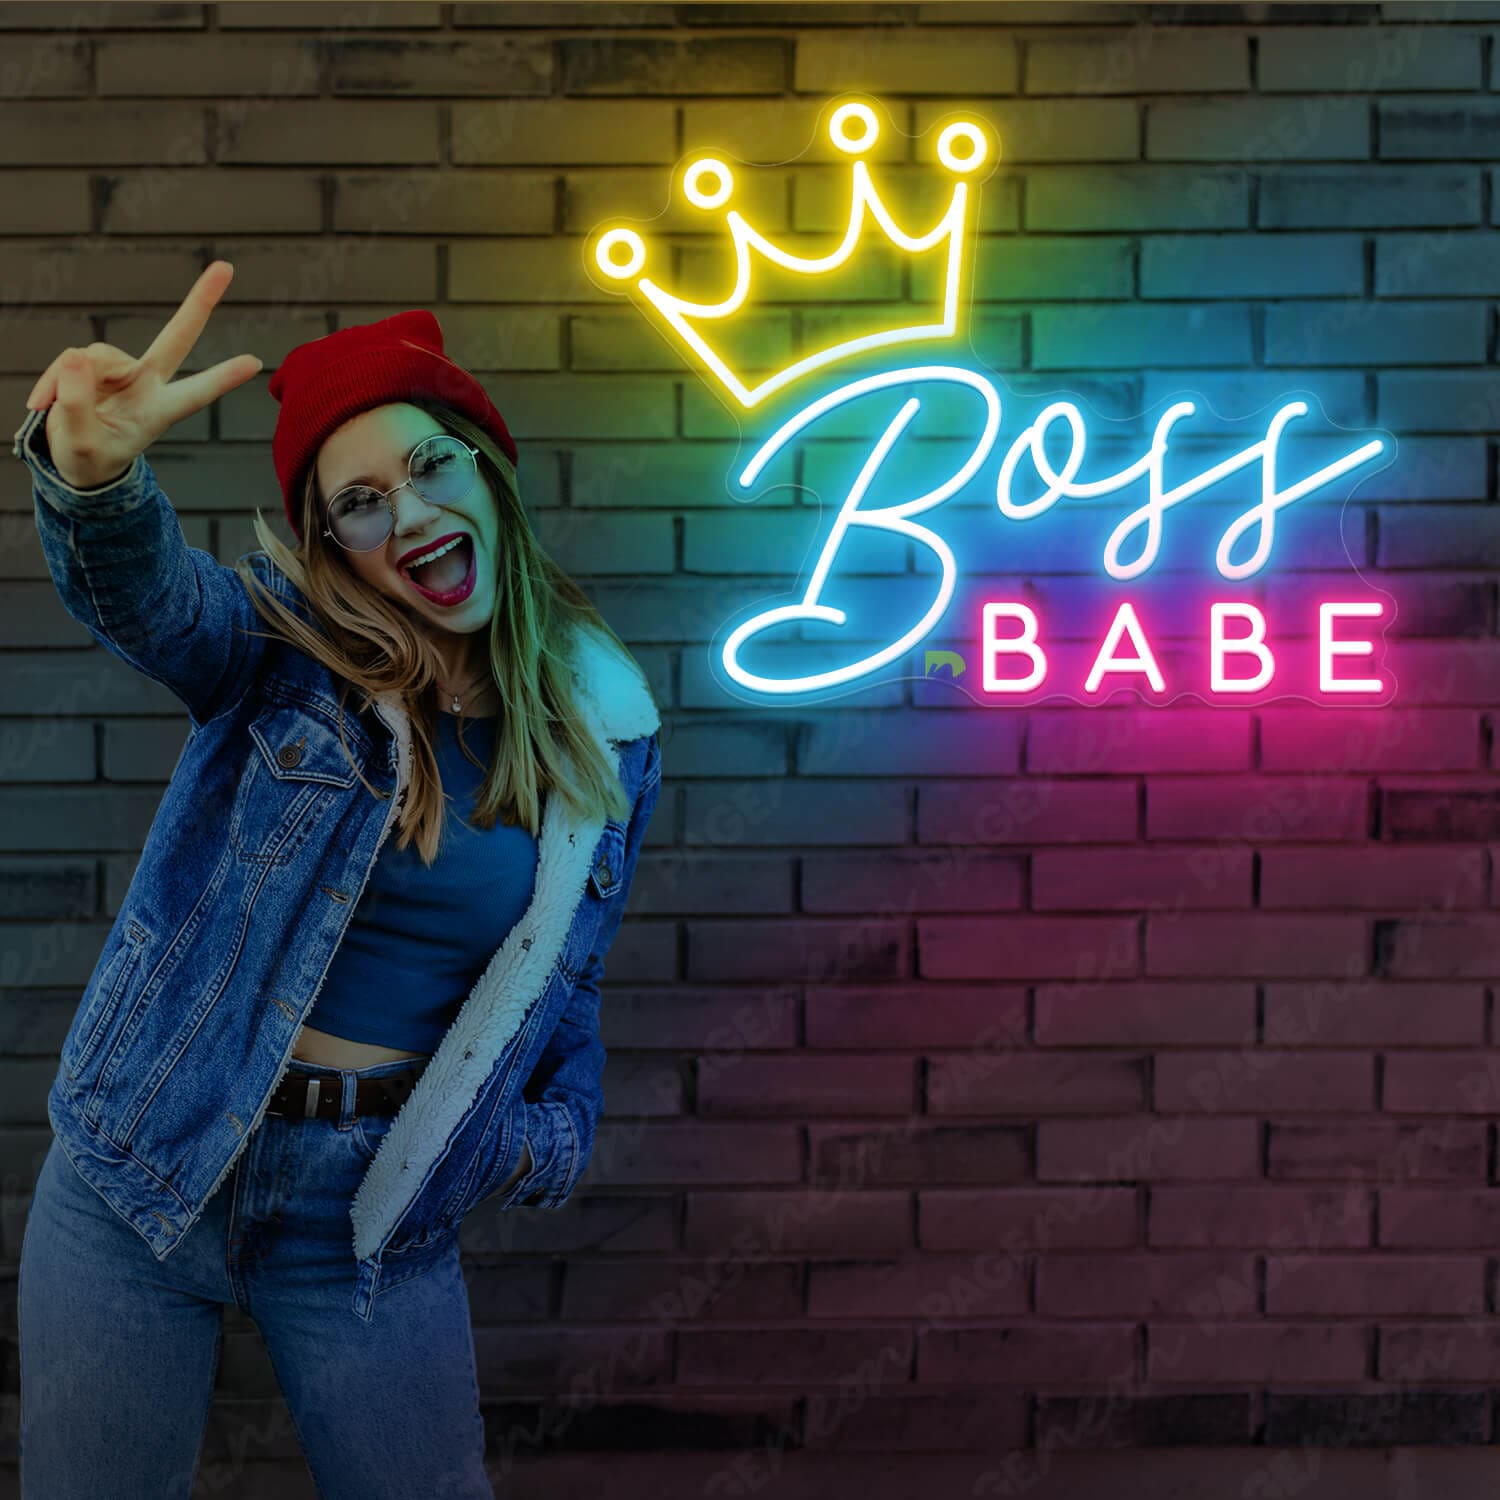 Boss Babe Neon Sign Babe Cave LED Light Sign Light Blue